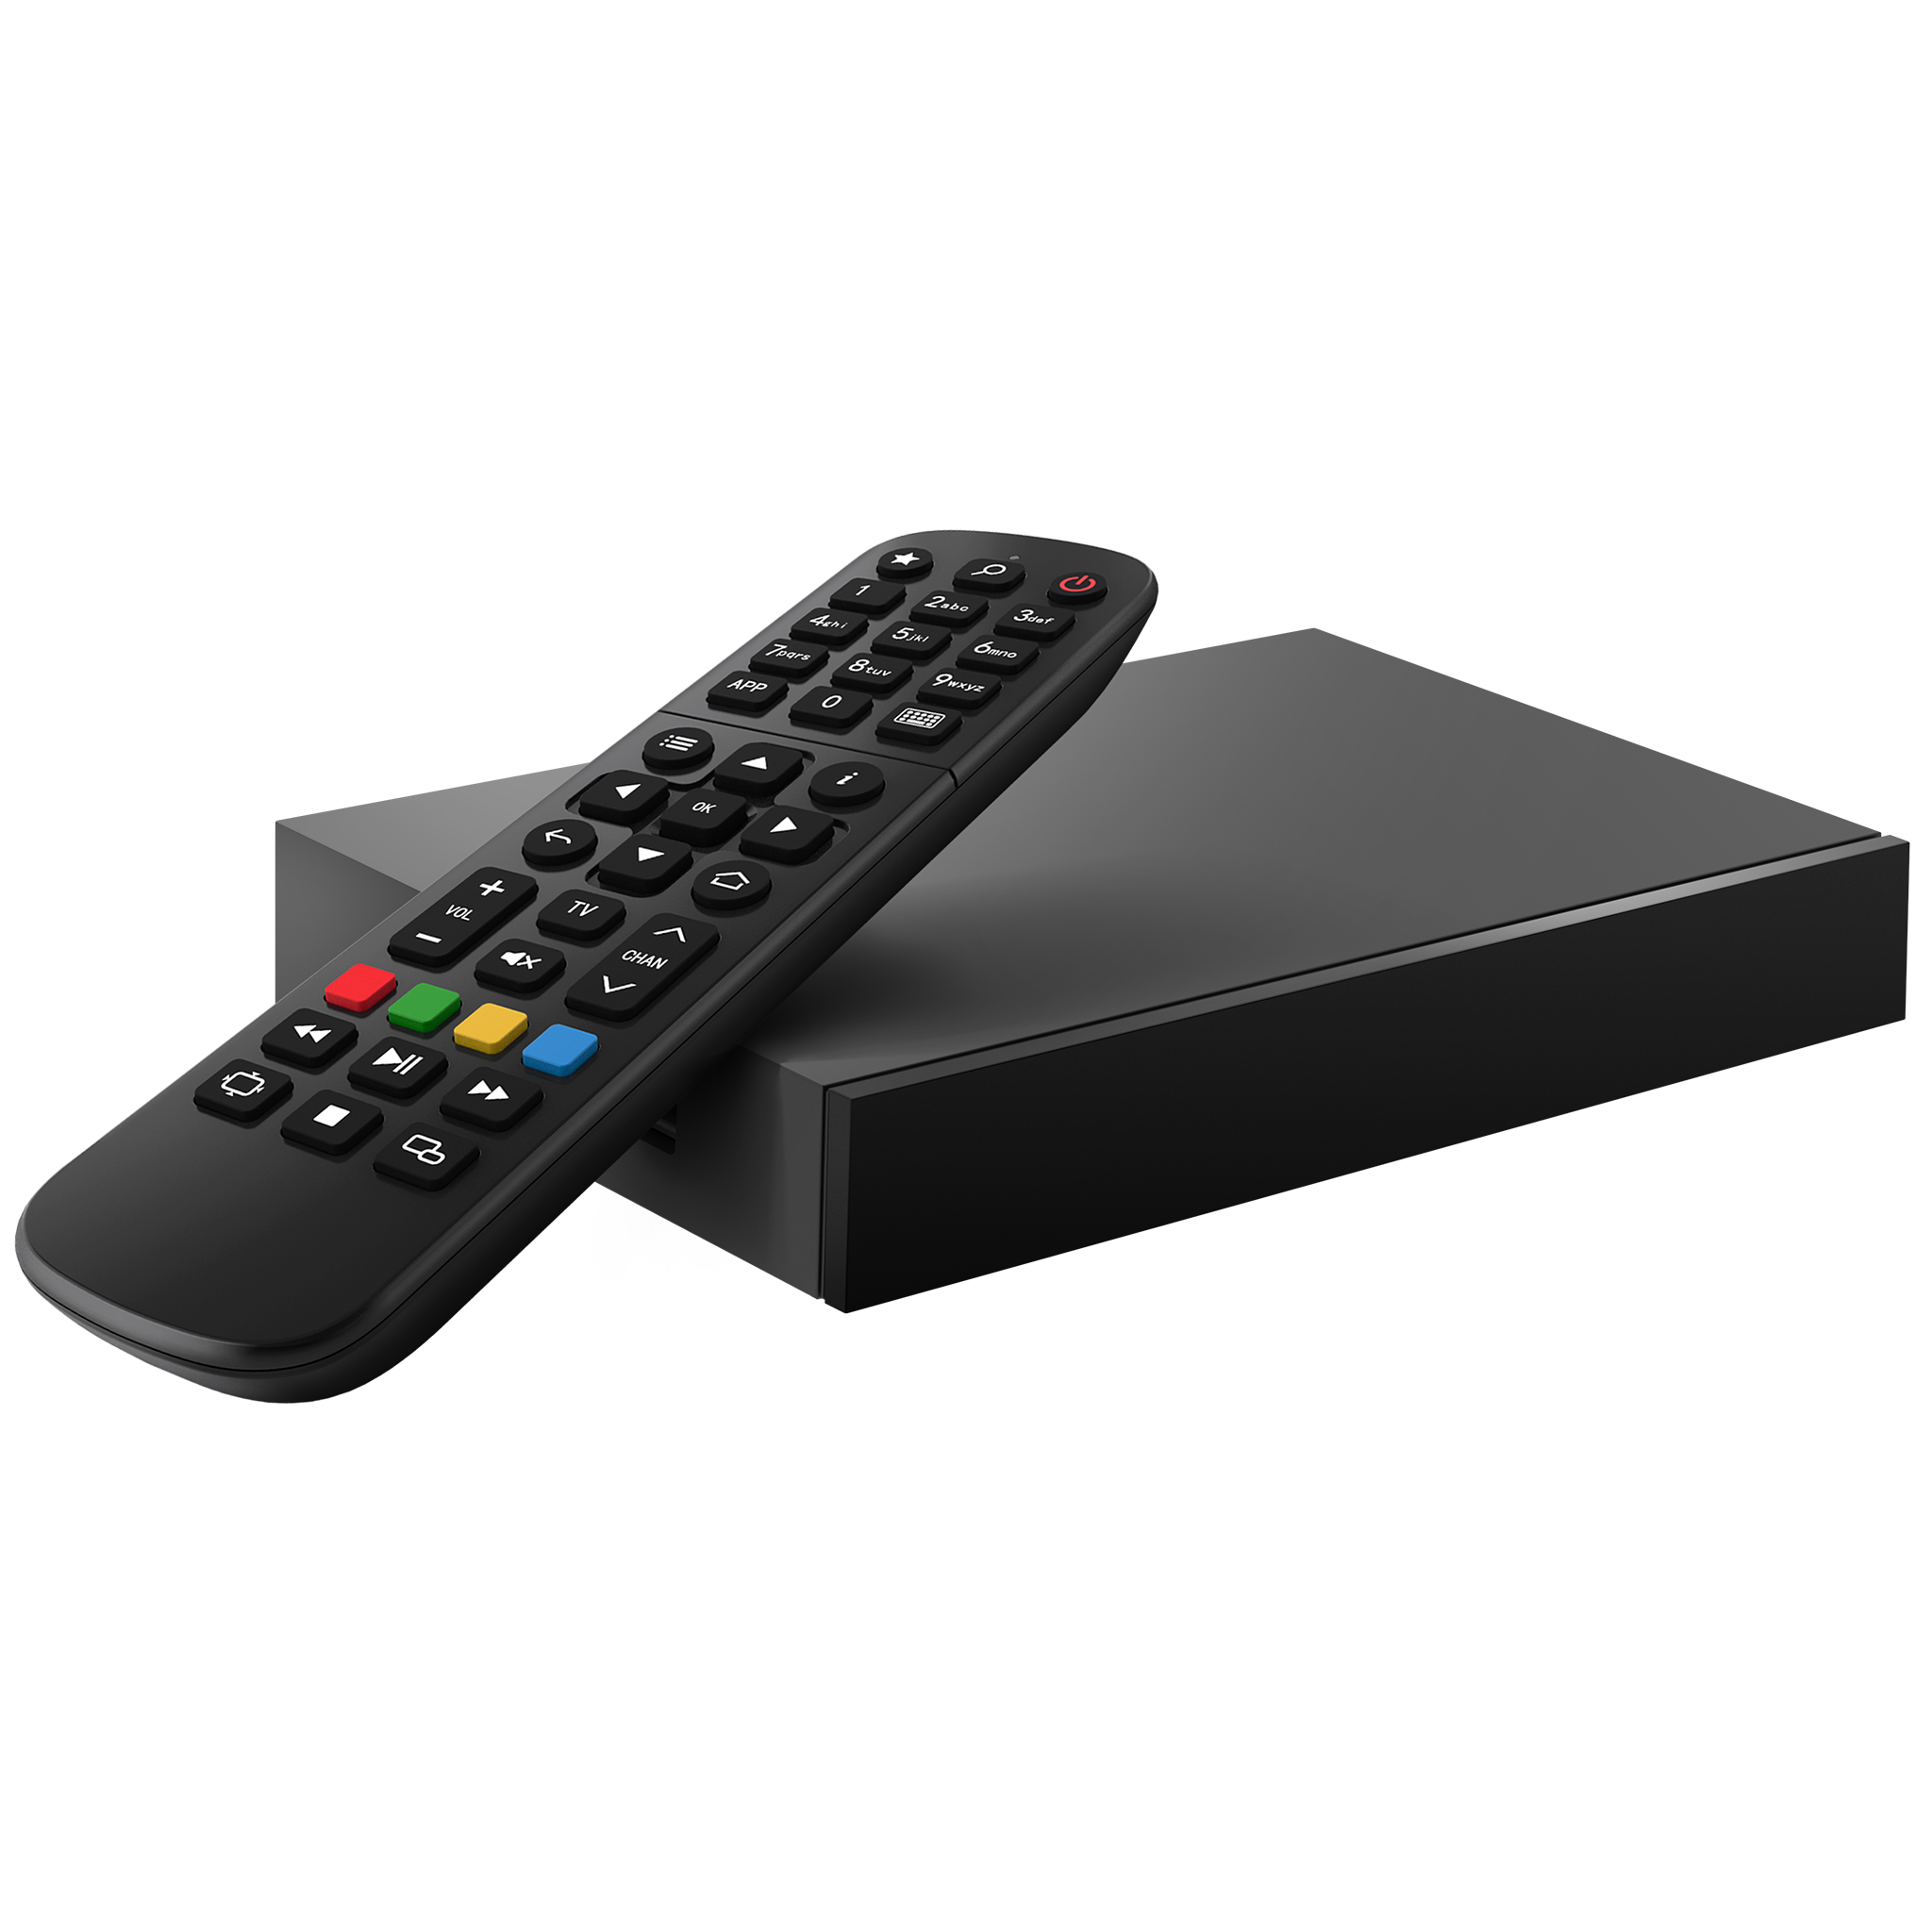 MAG 520 IP TV Internet Streamer HEVC H.265 4K UHD 60FPS Linux USB 3.0 LAN HDMI